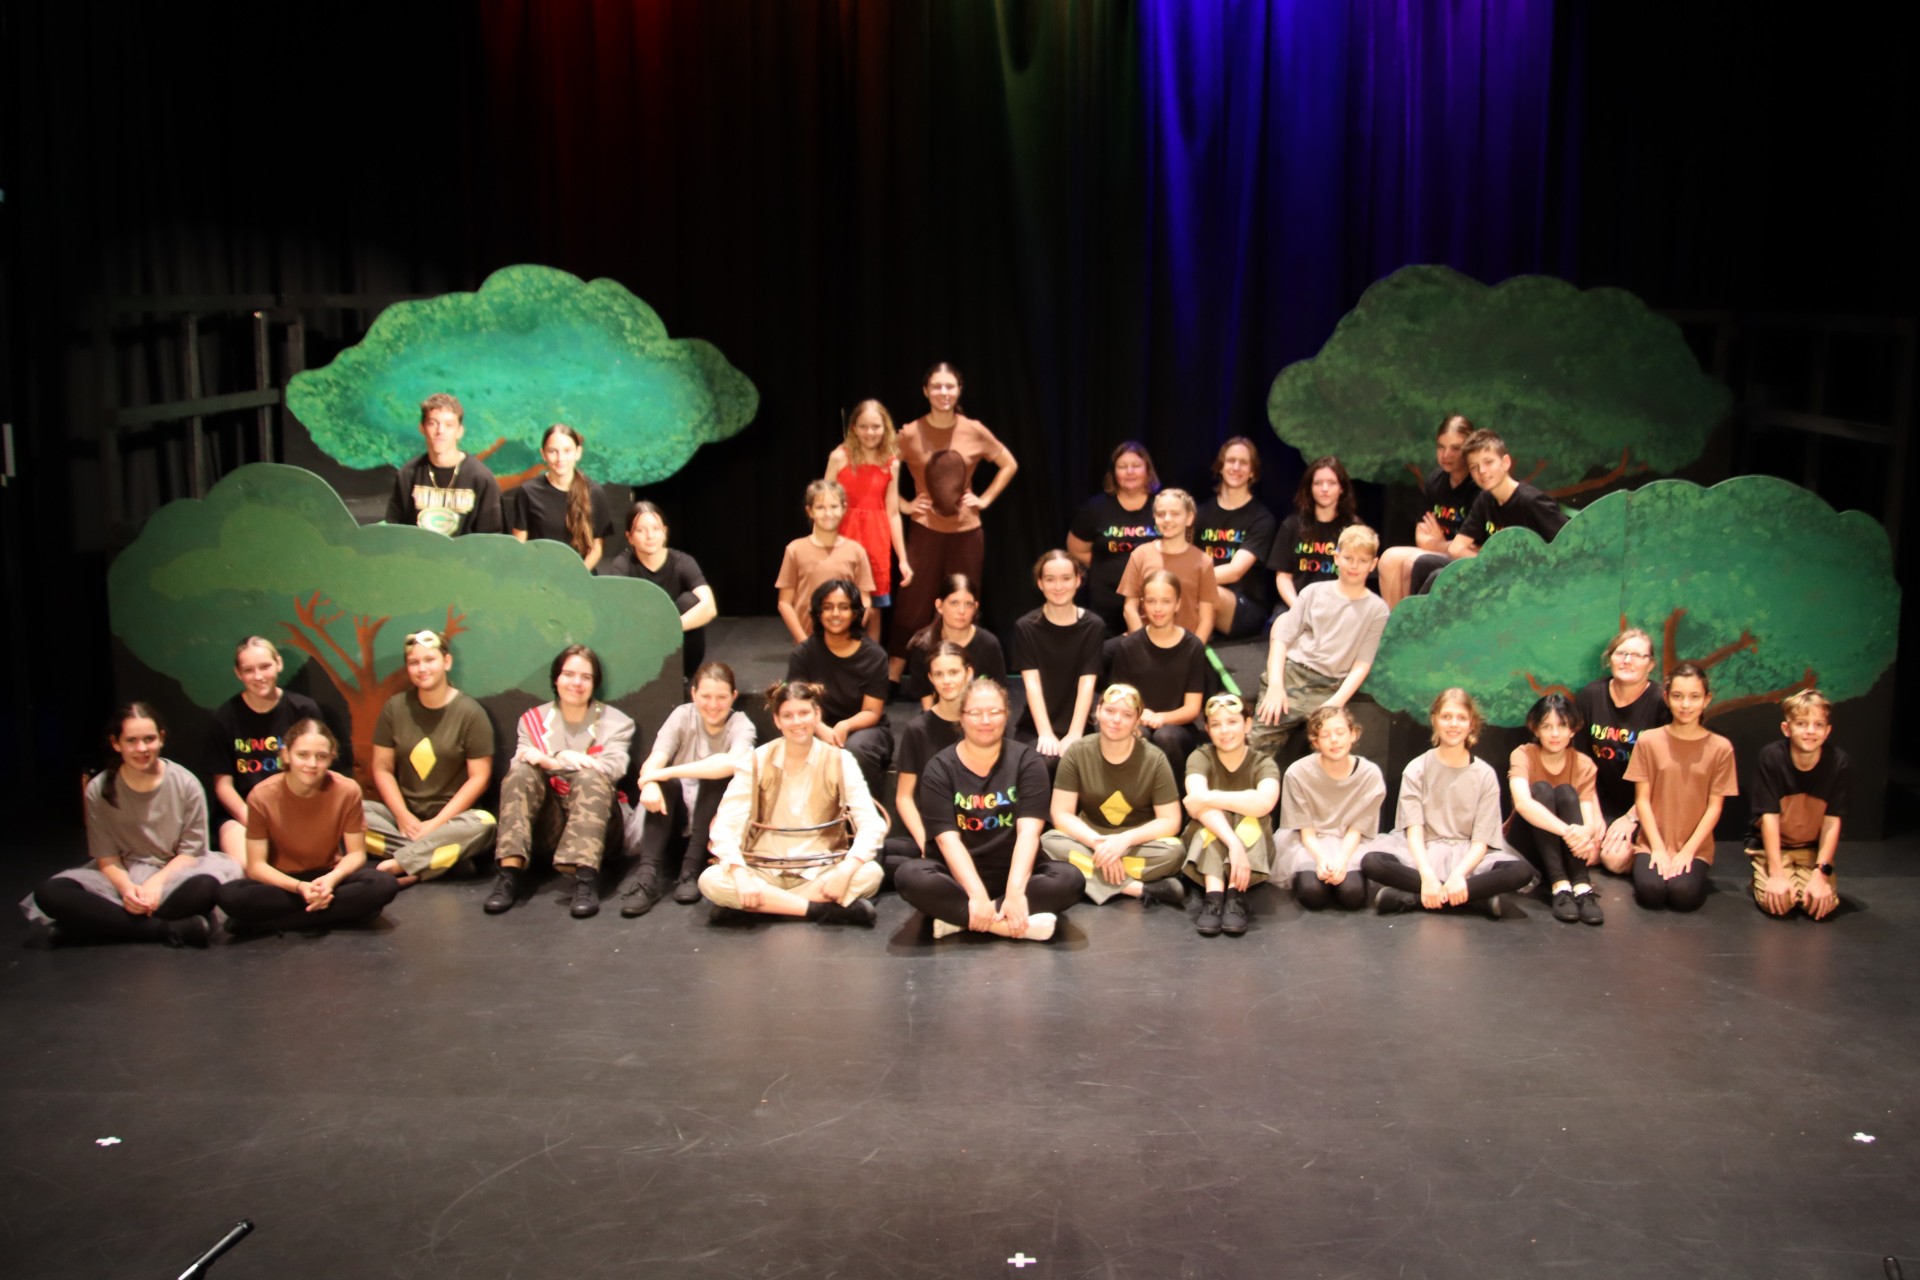 Jungle Book -The Musical cast